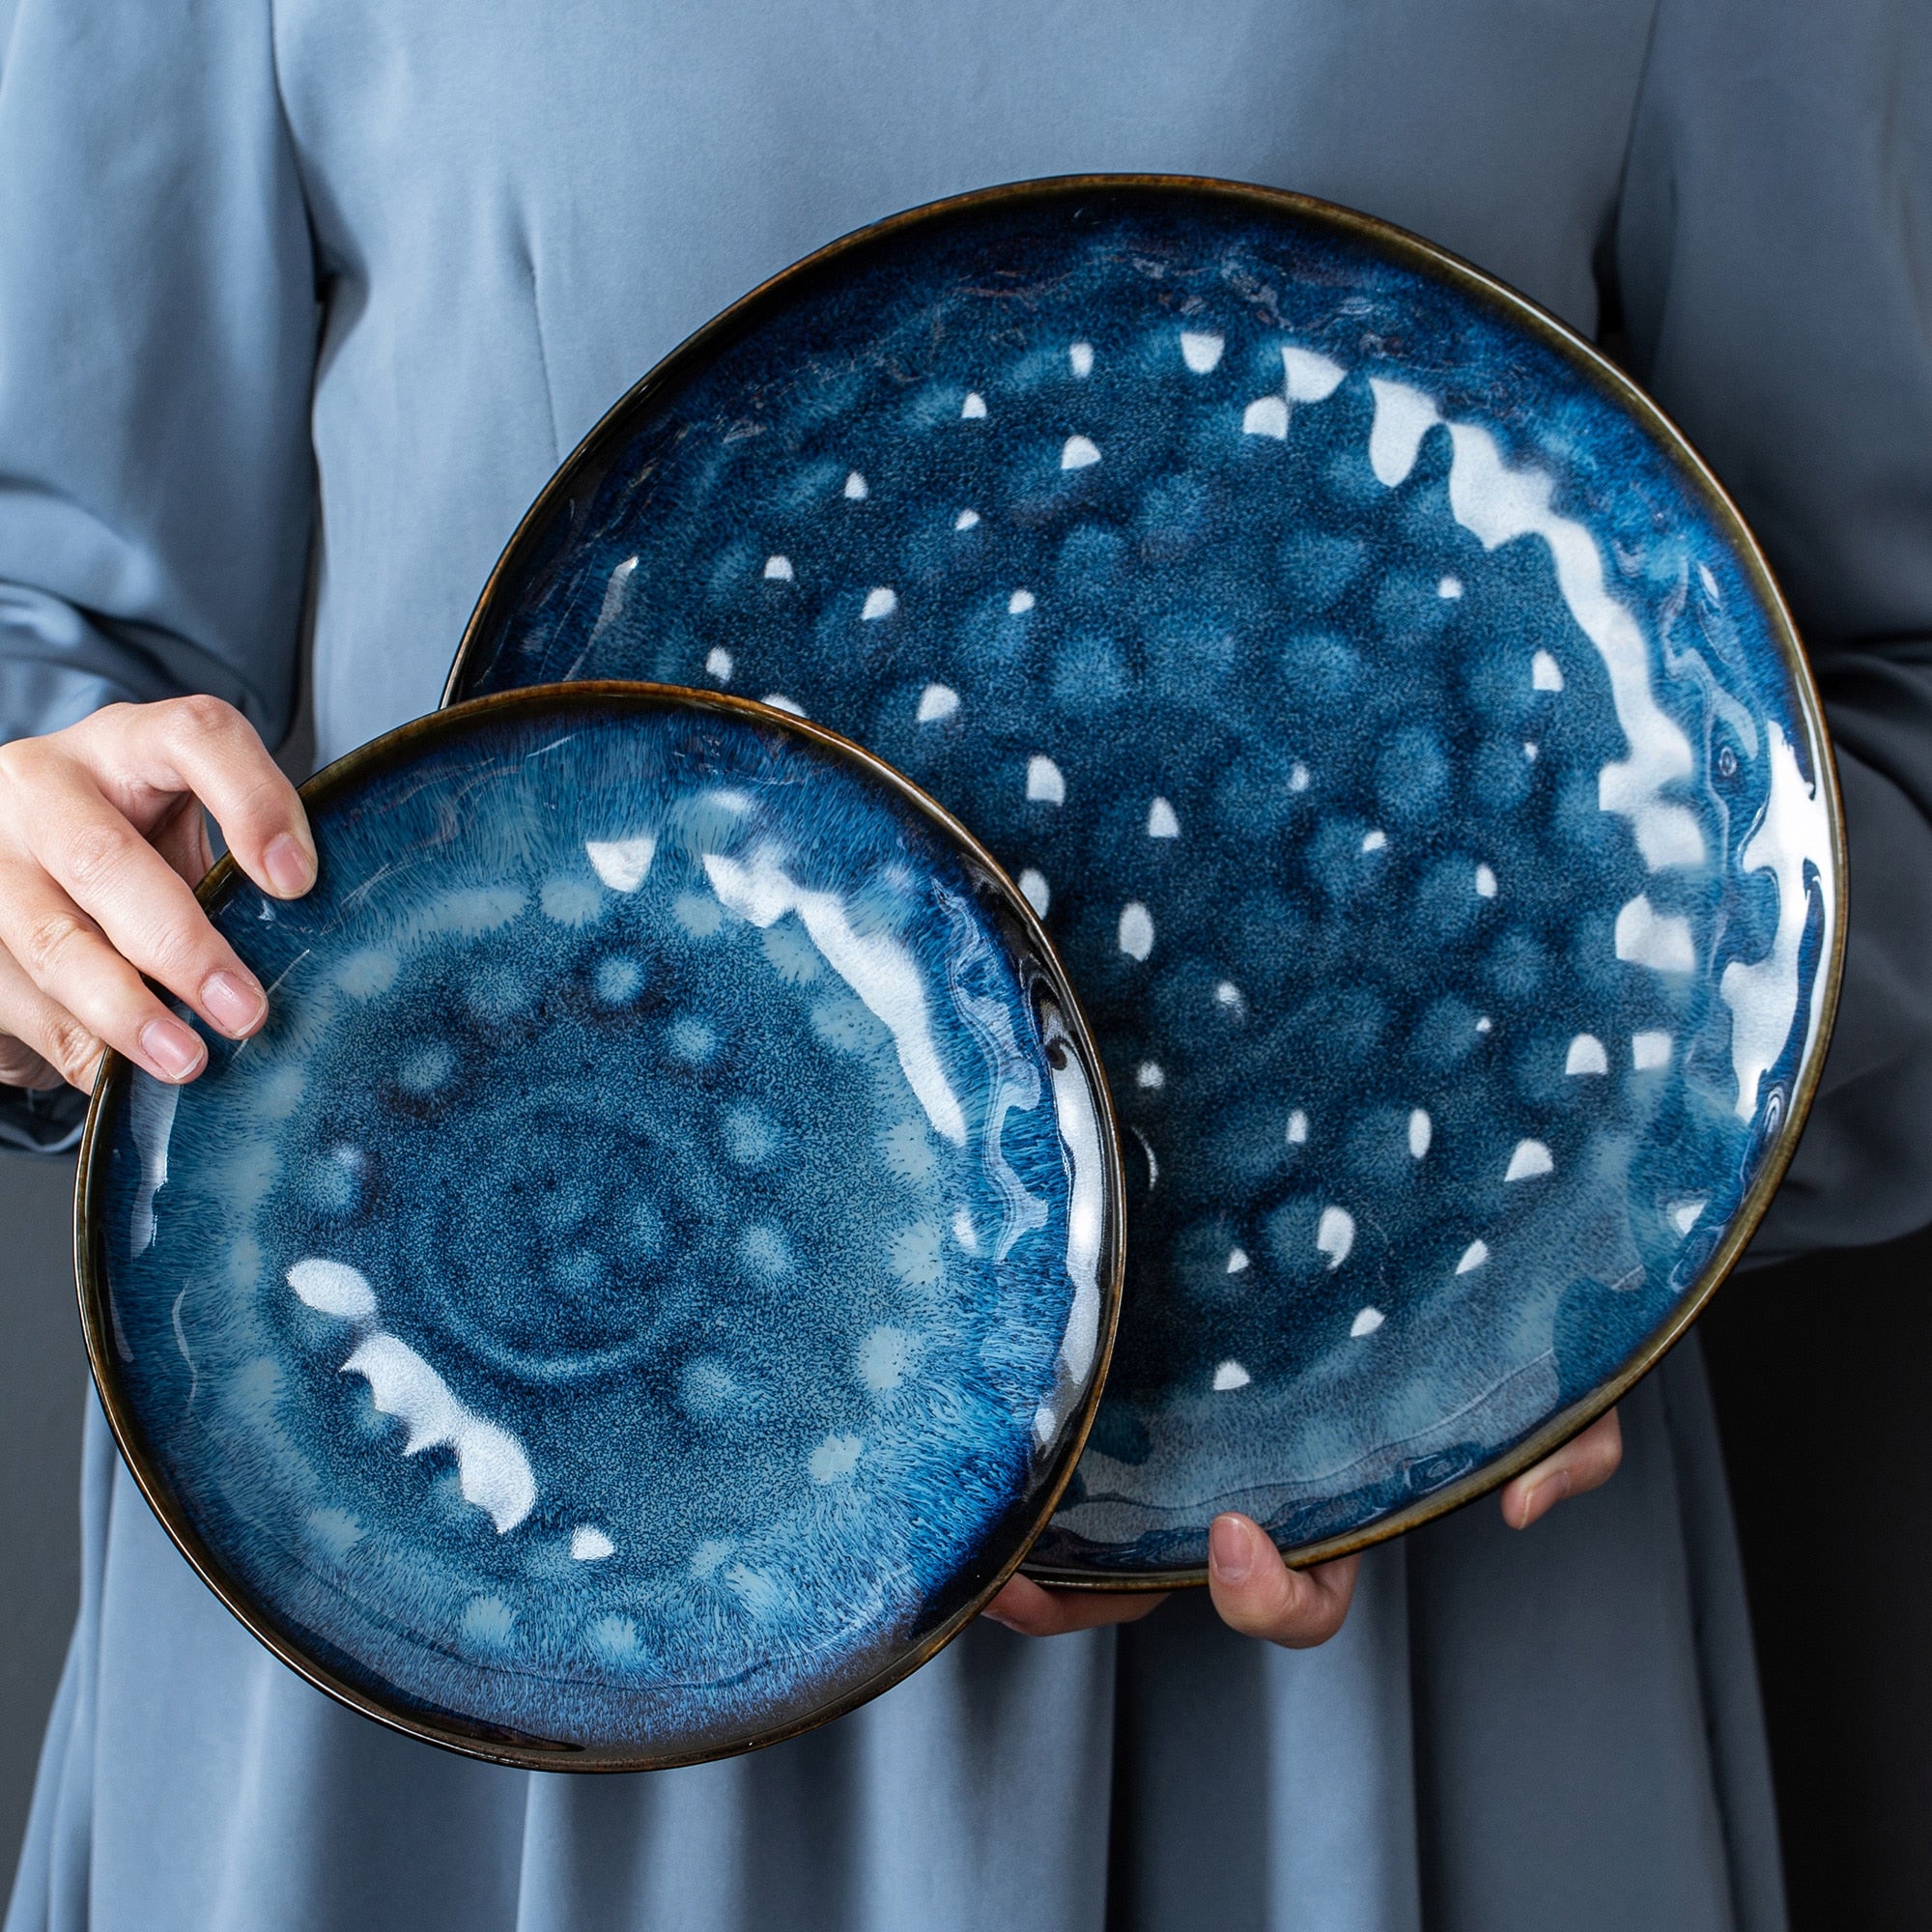 Starry Dinner Set Vintage Look Ceramic Blue Stoneware Tableware Set